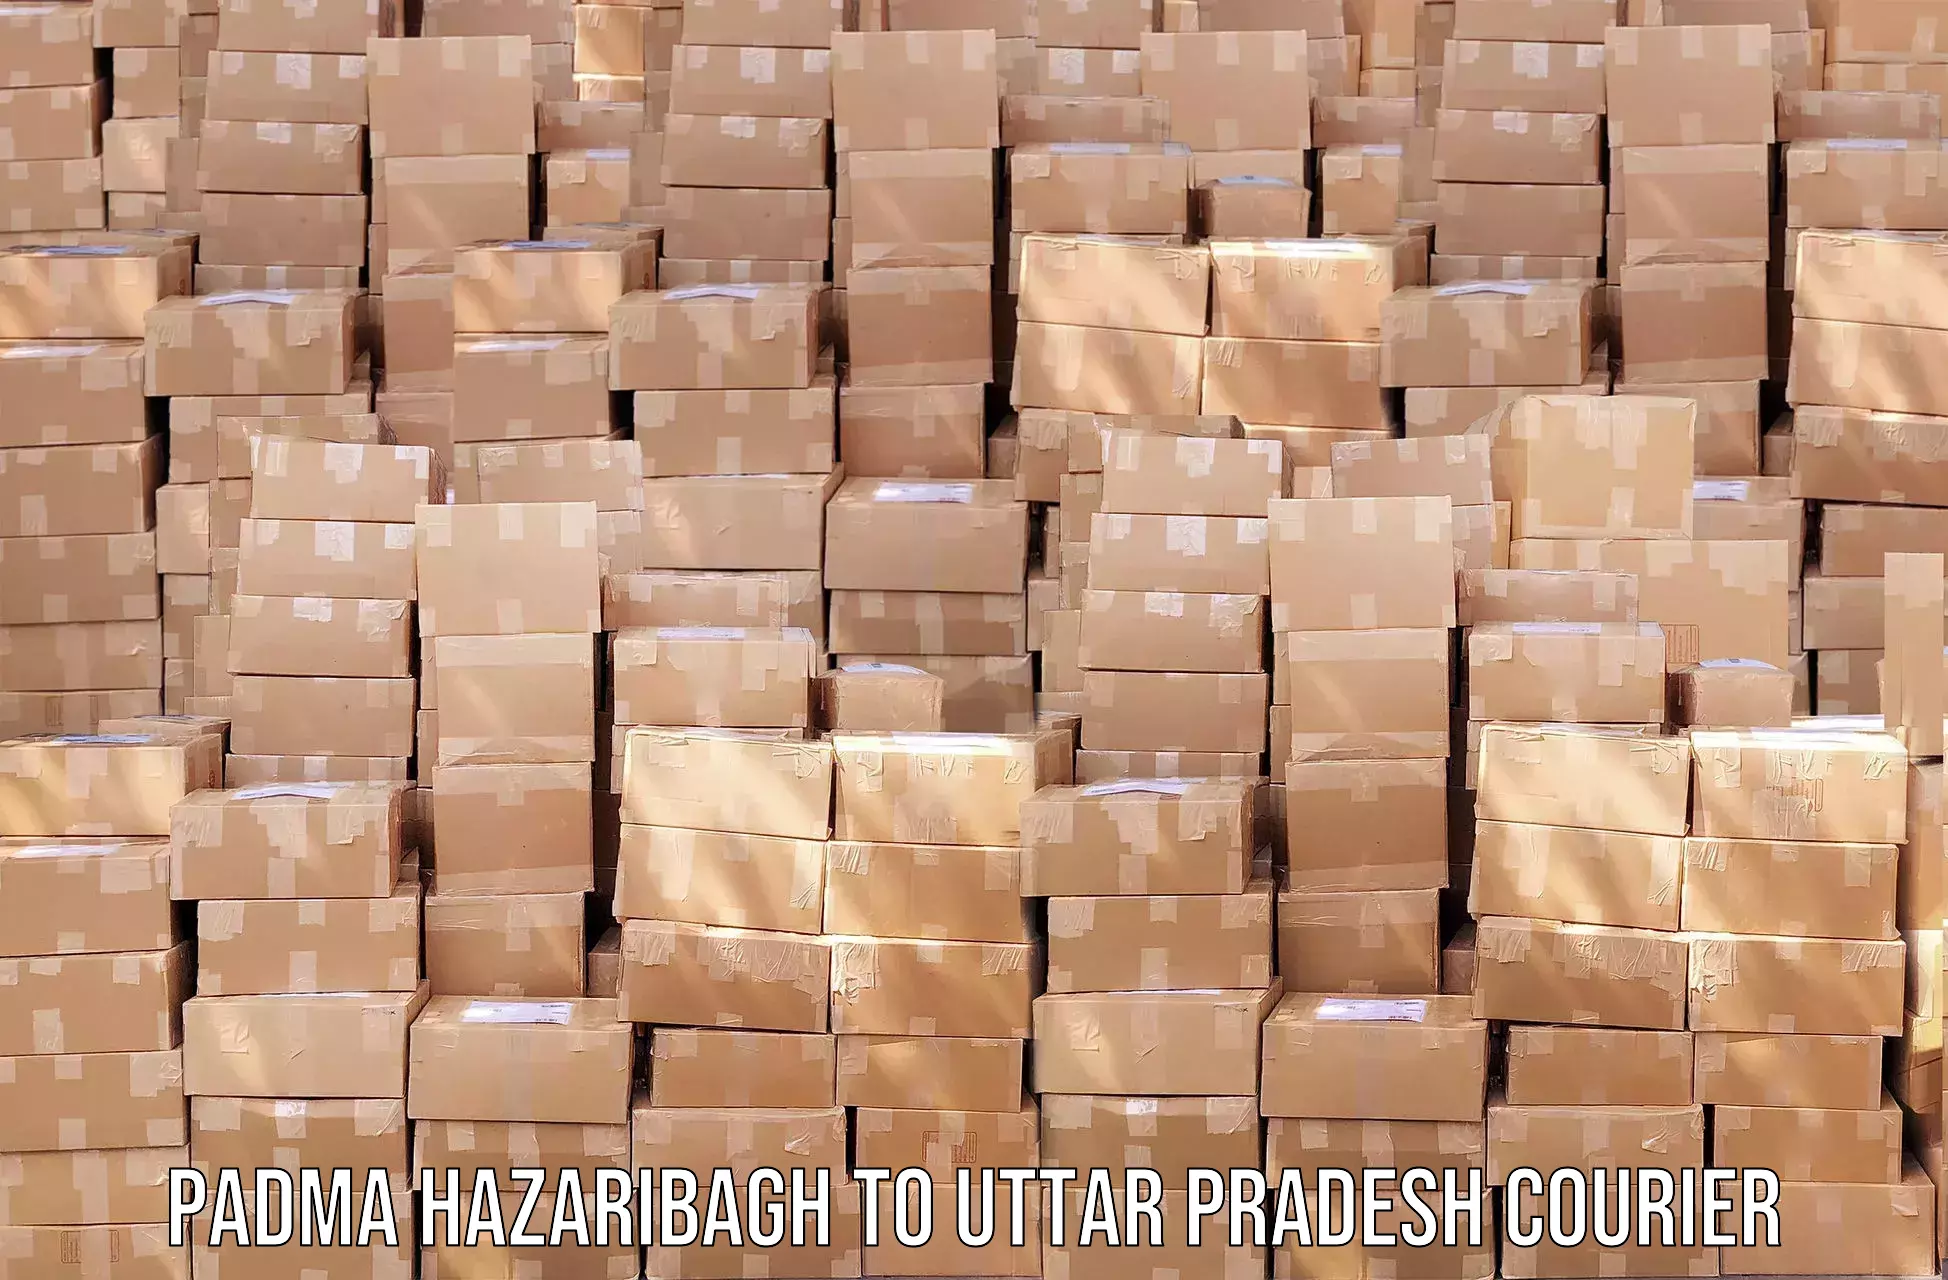 Efficient cargo handling Padma Hazaribagh to Uttar Pradesh